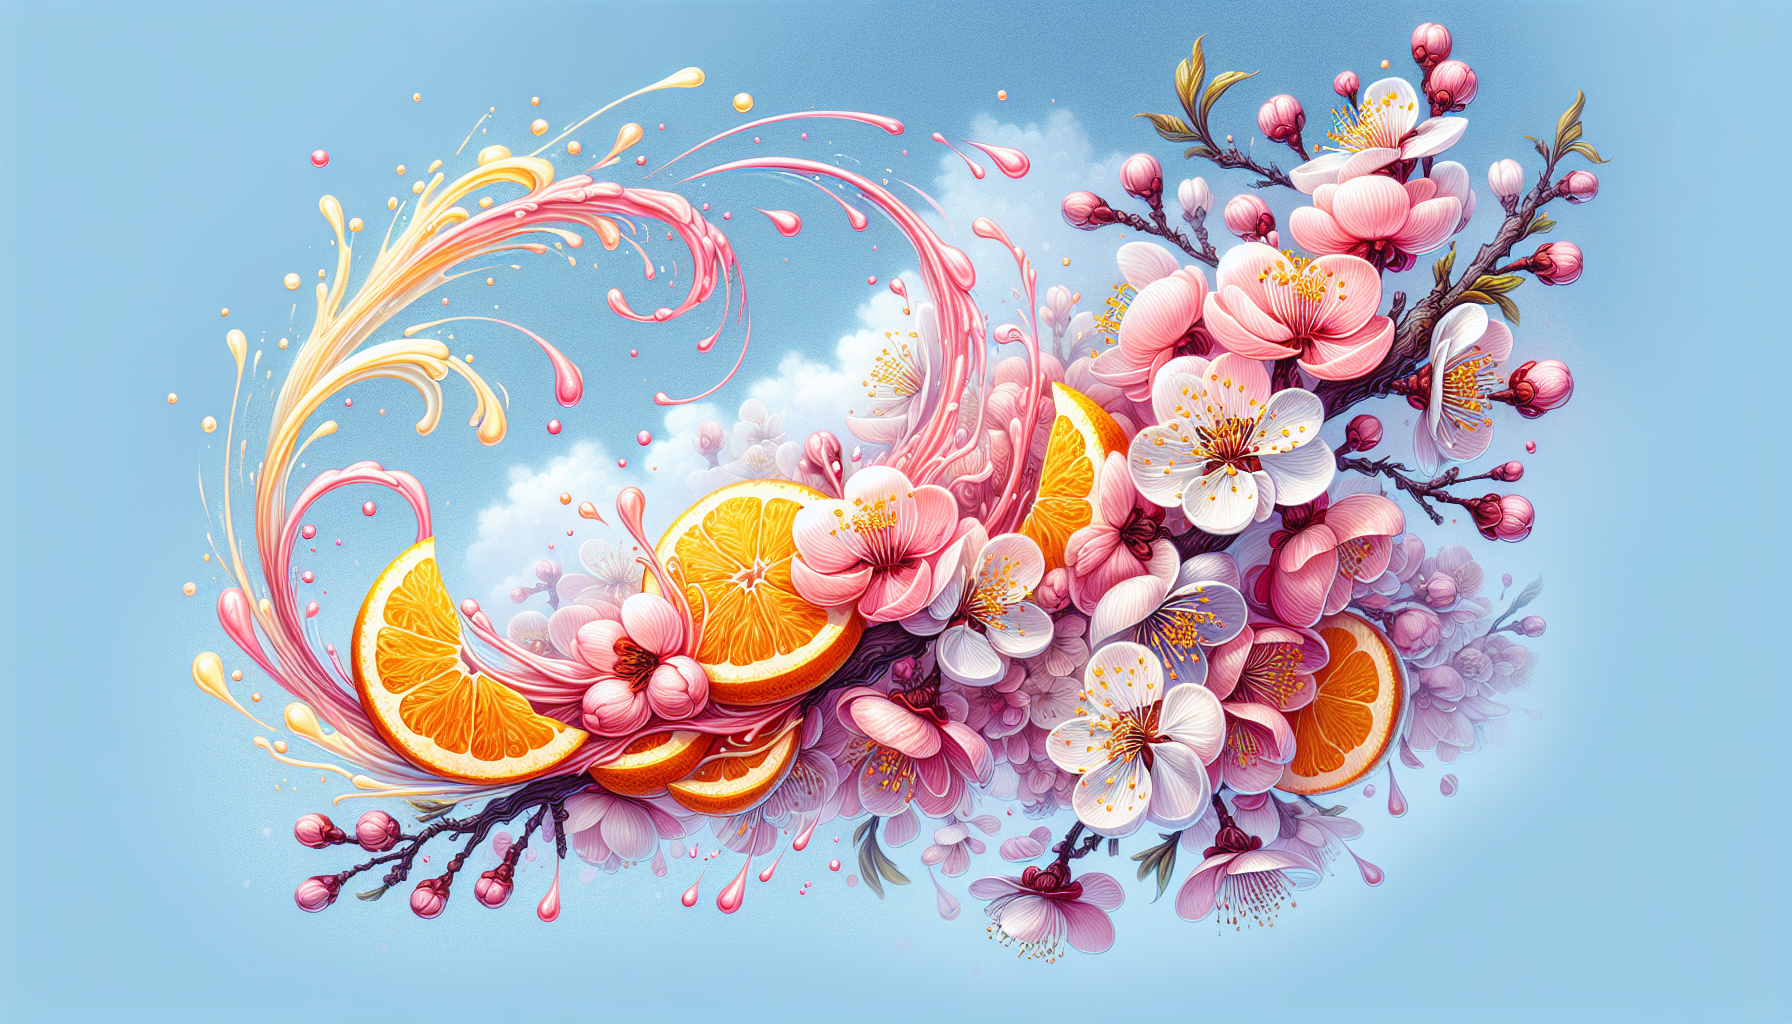 Cherry blossom and orange zest fragrance